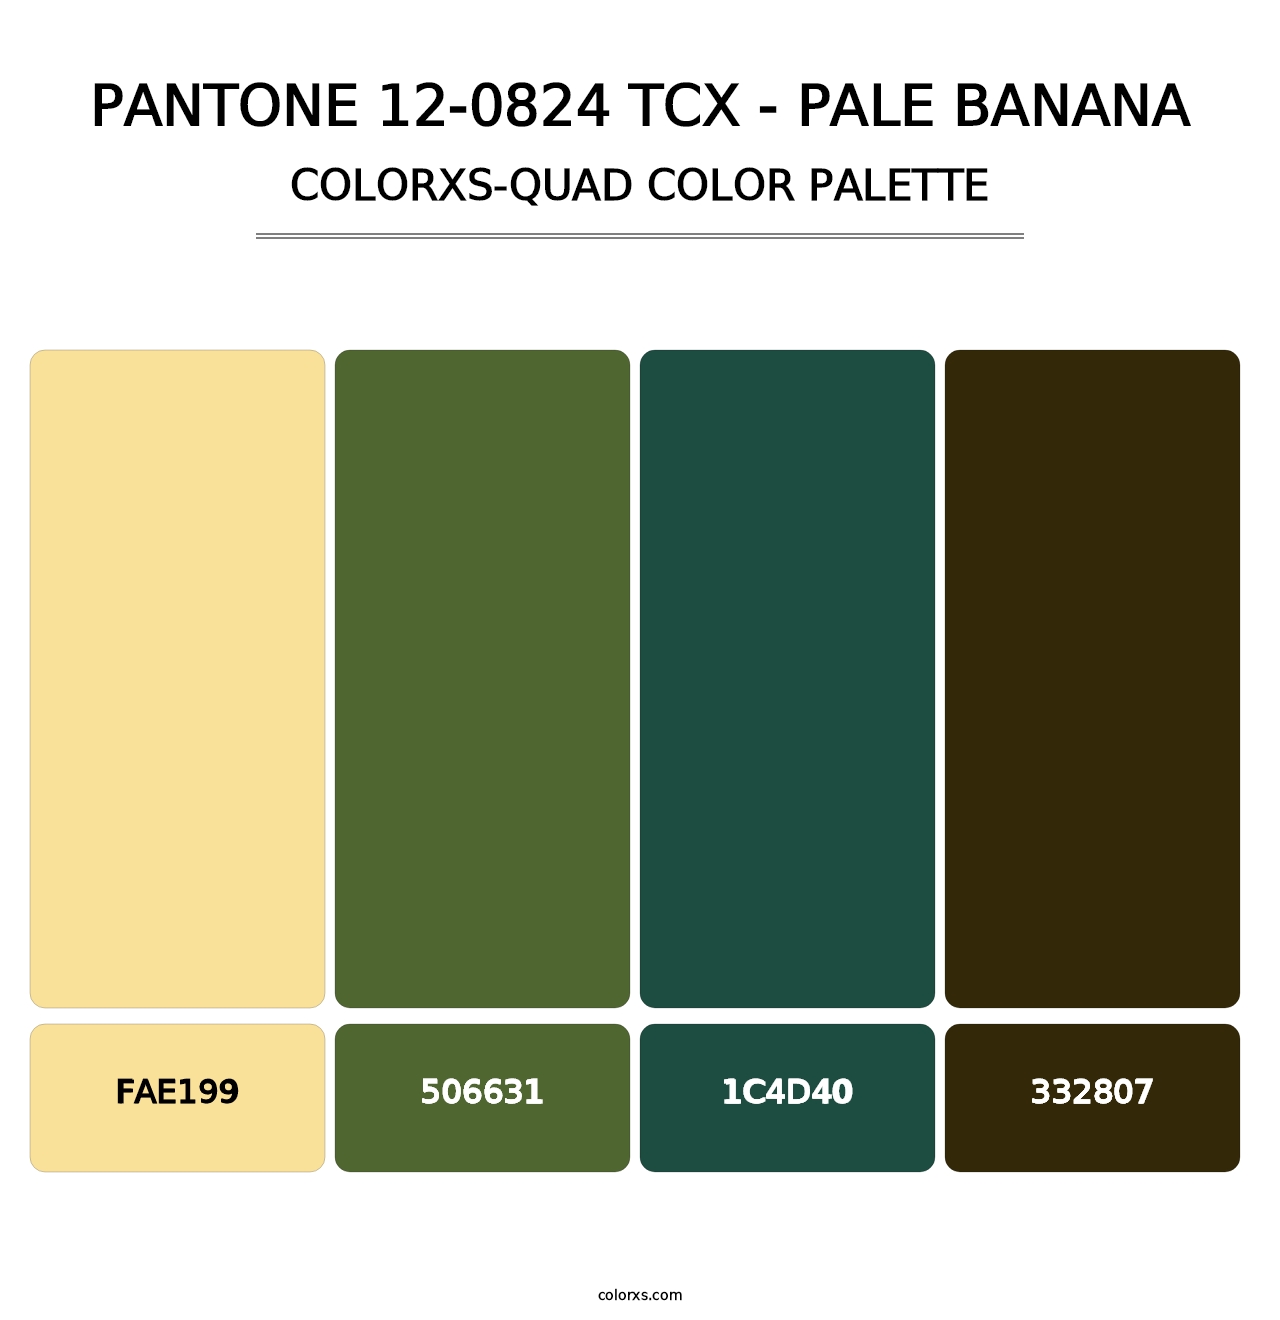 PANTONE 12-0824 TCX - Pale Banana - Colorxs Quad Palette